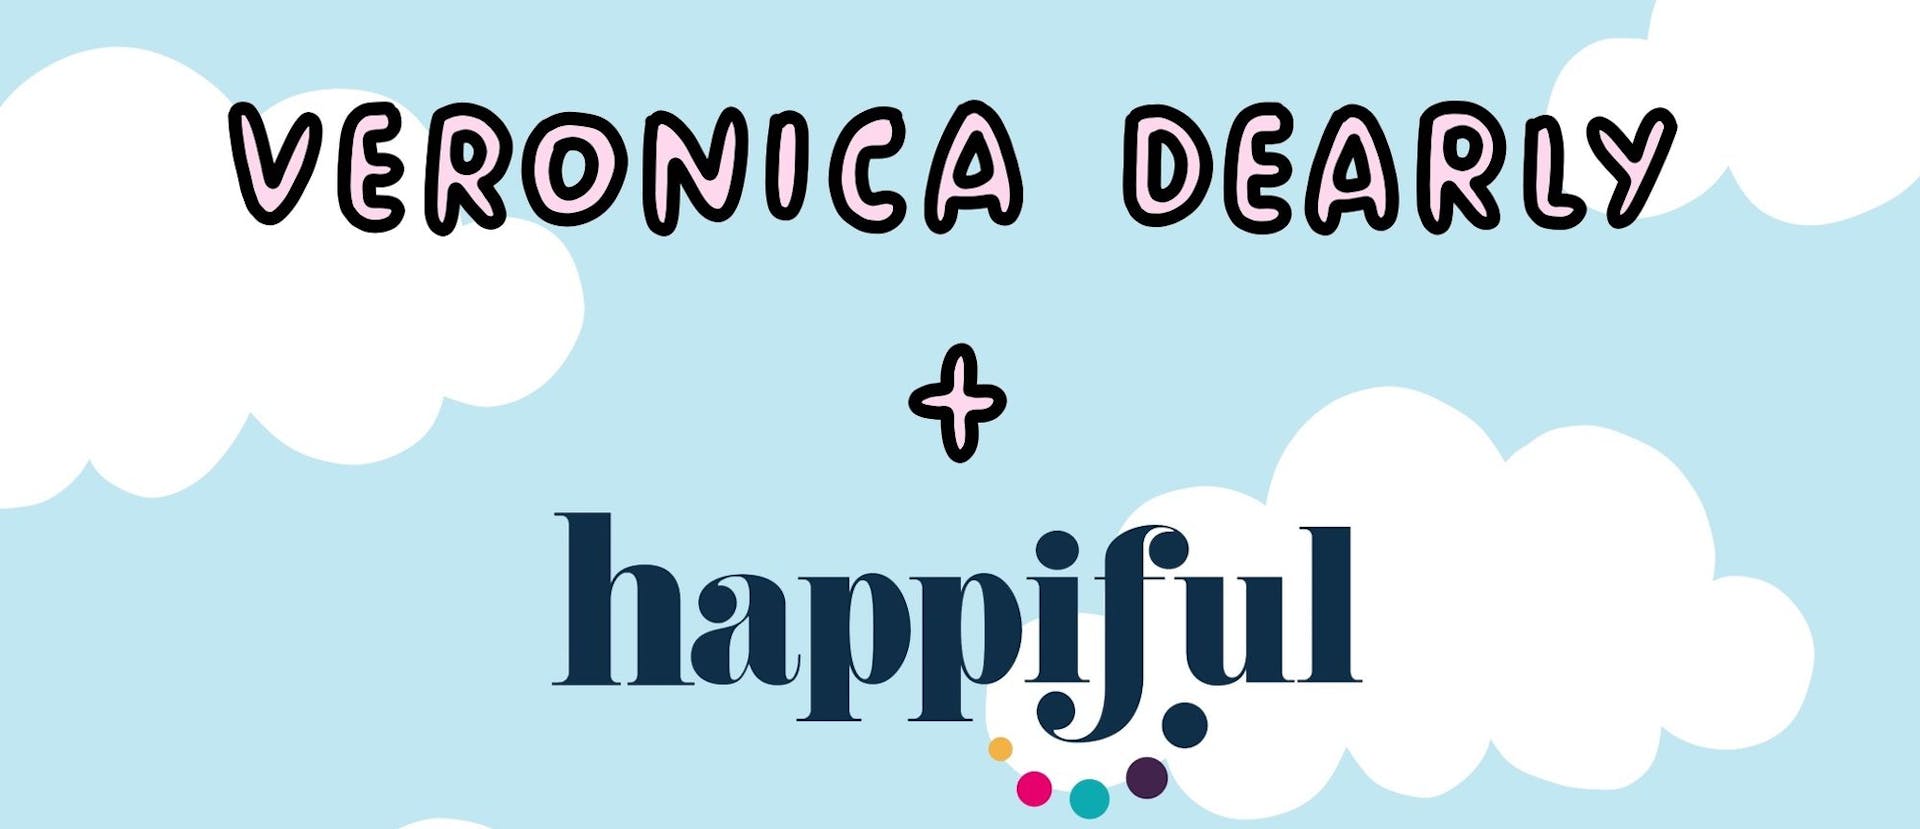 Veronica Dearly + happiful